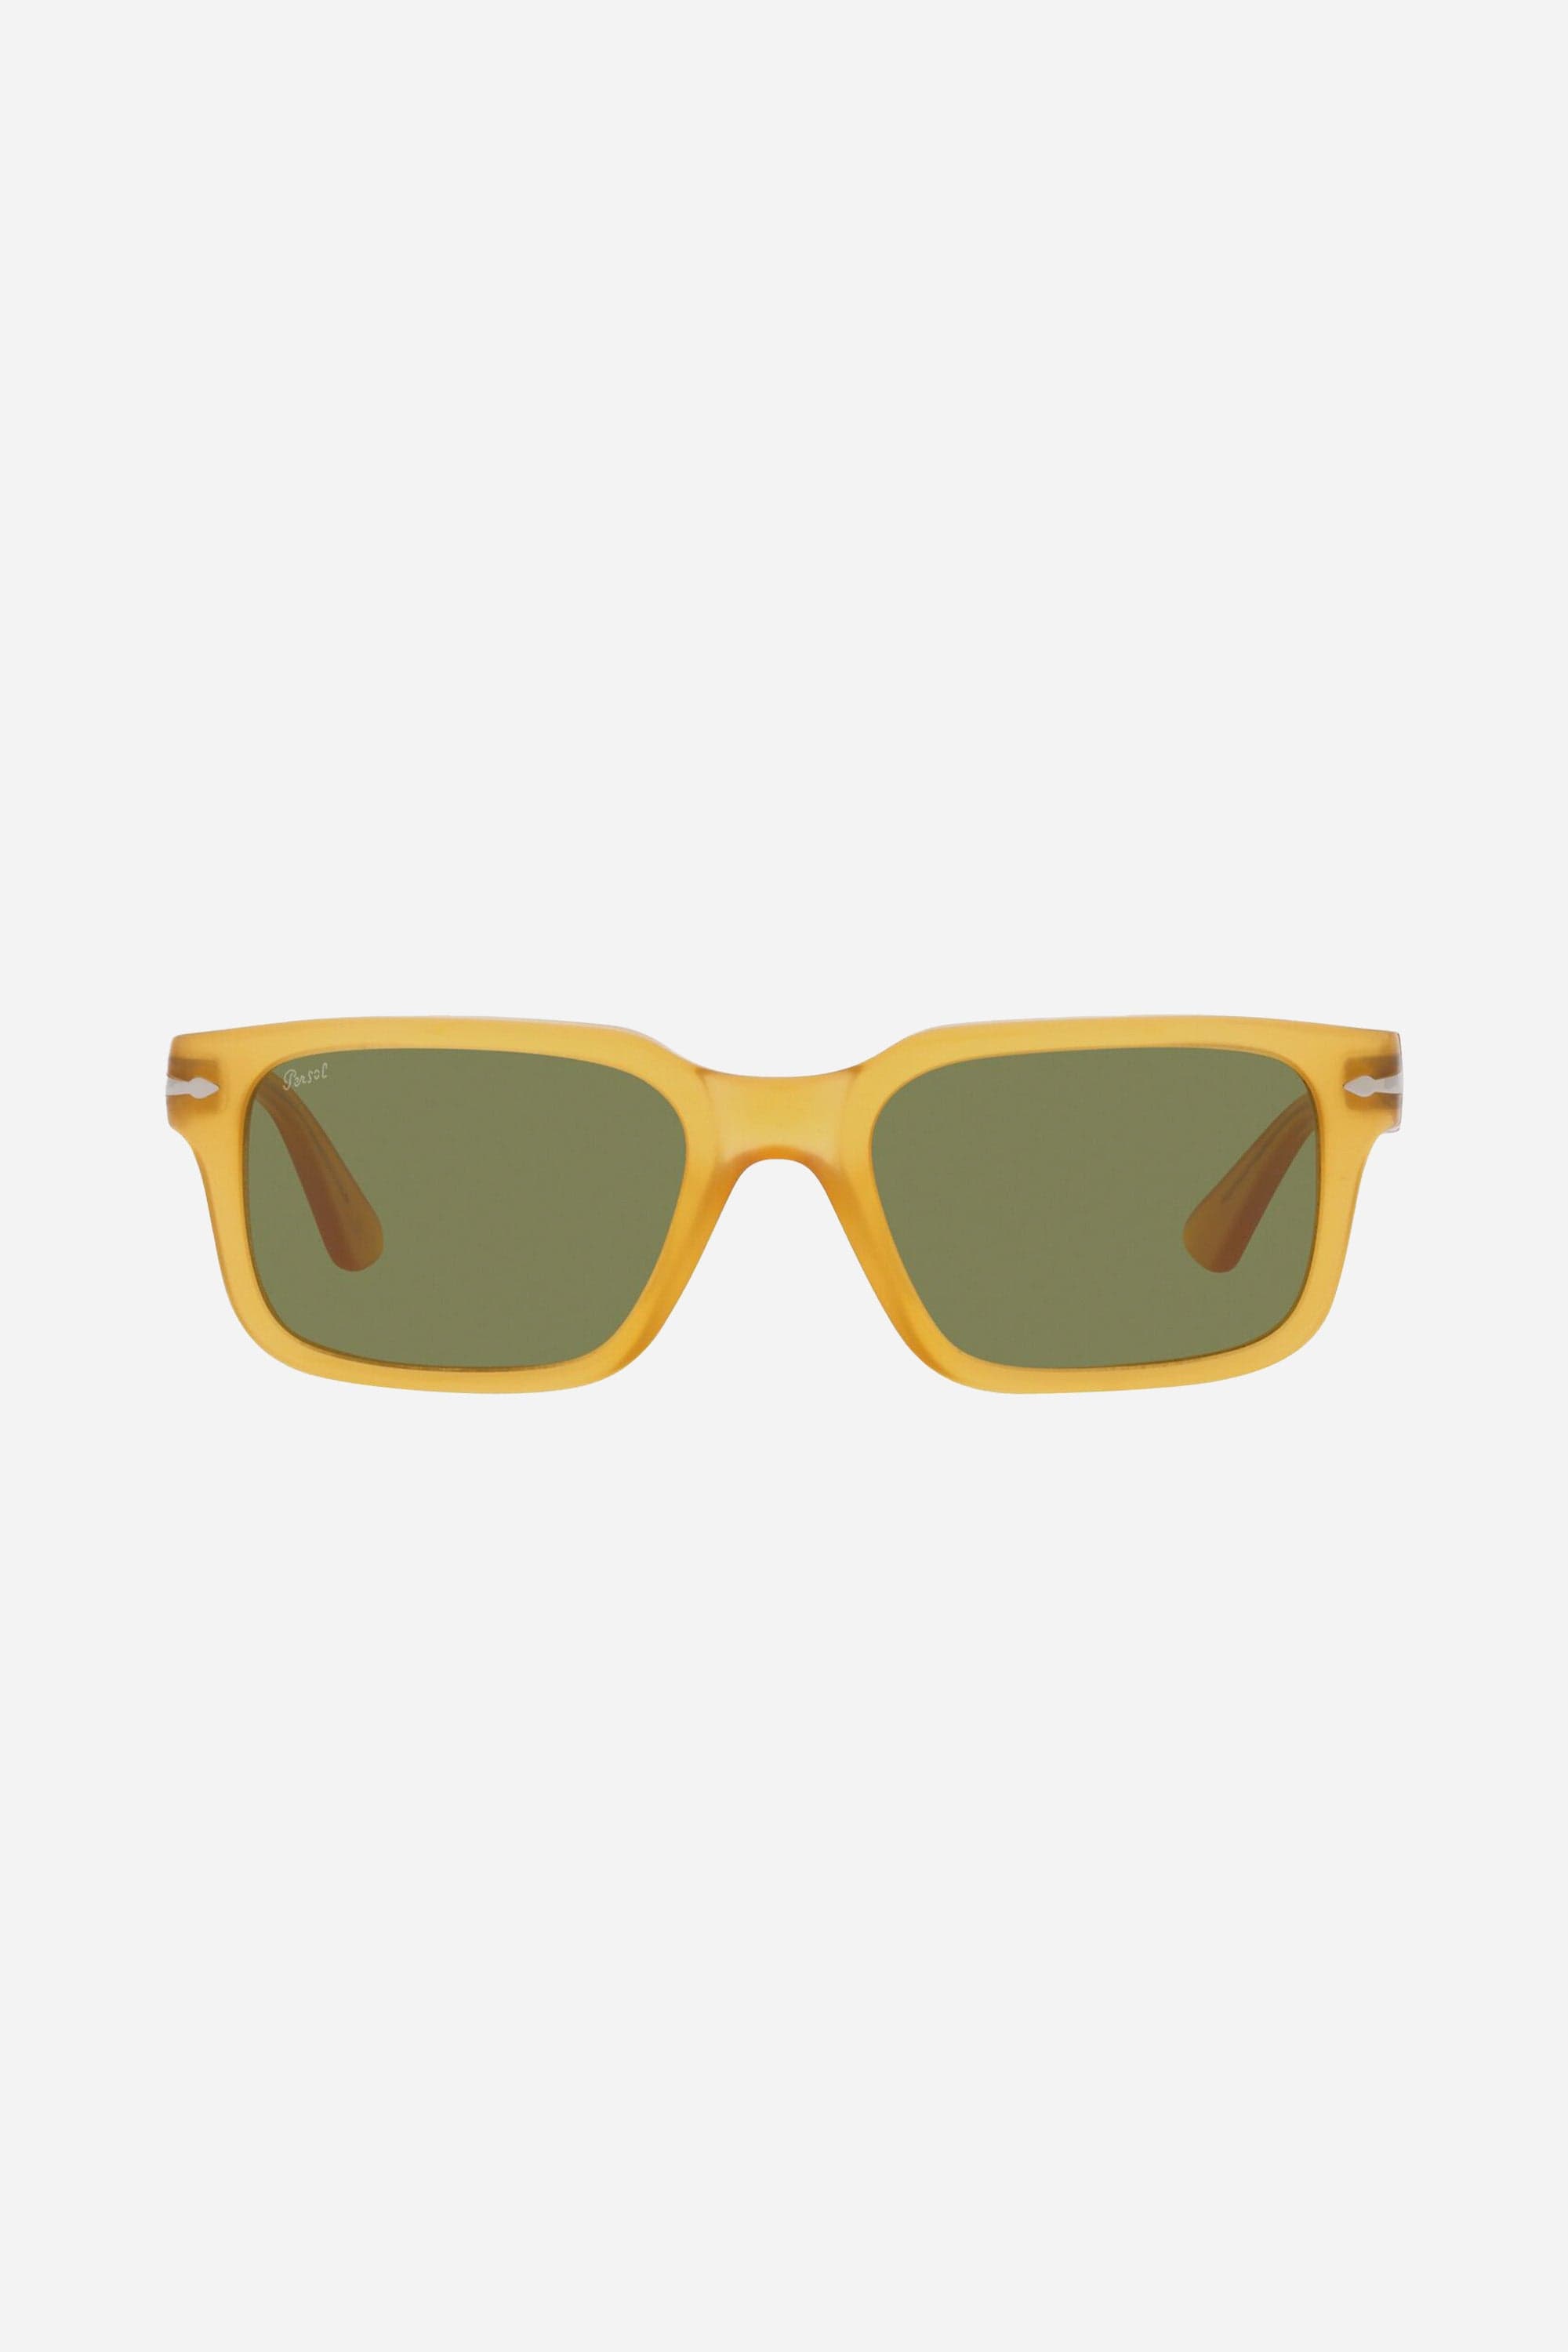 Persol squared yellow sunglasses - Eyewear Club